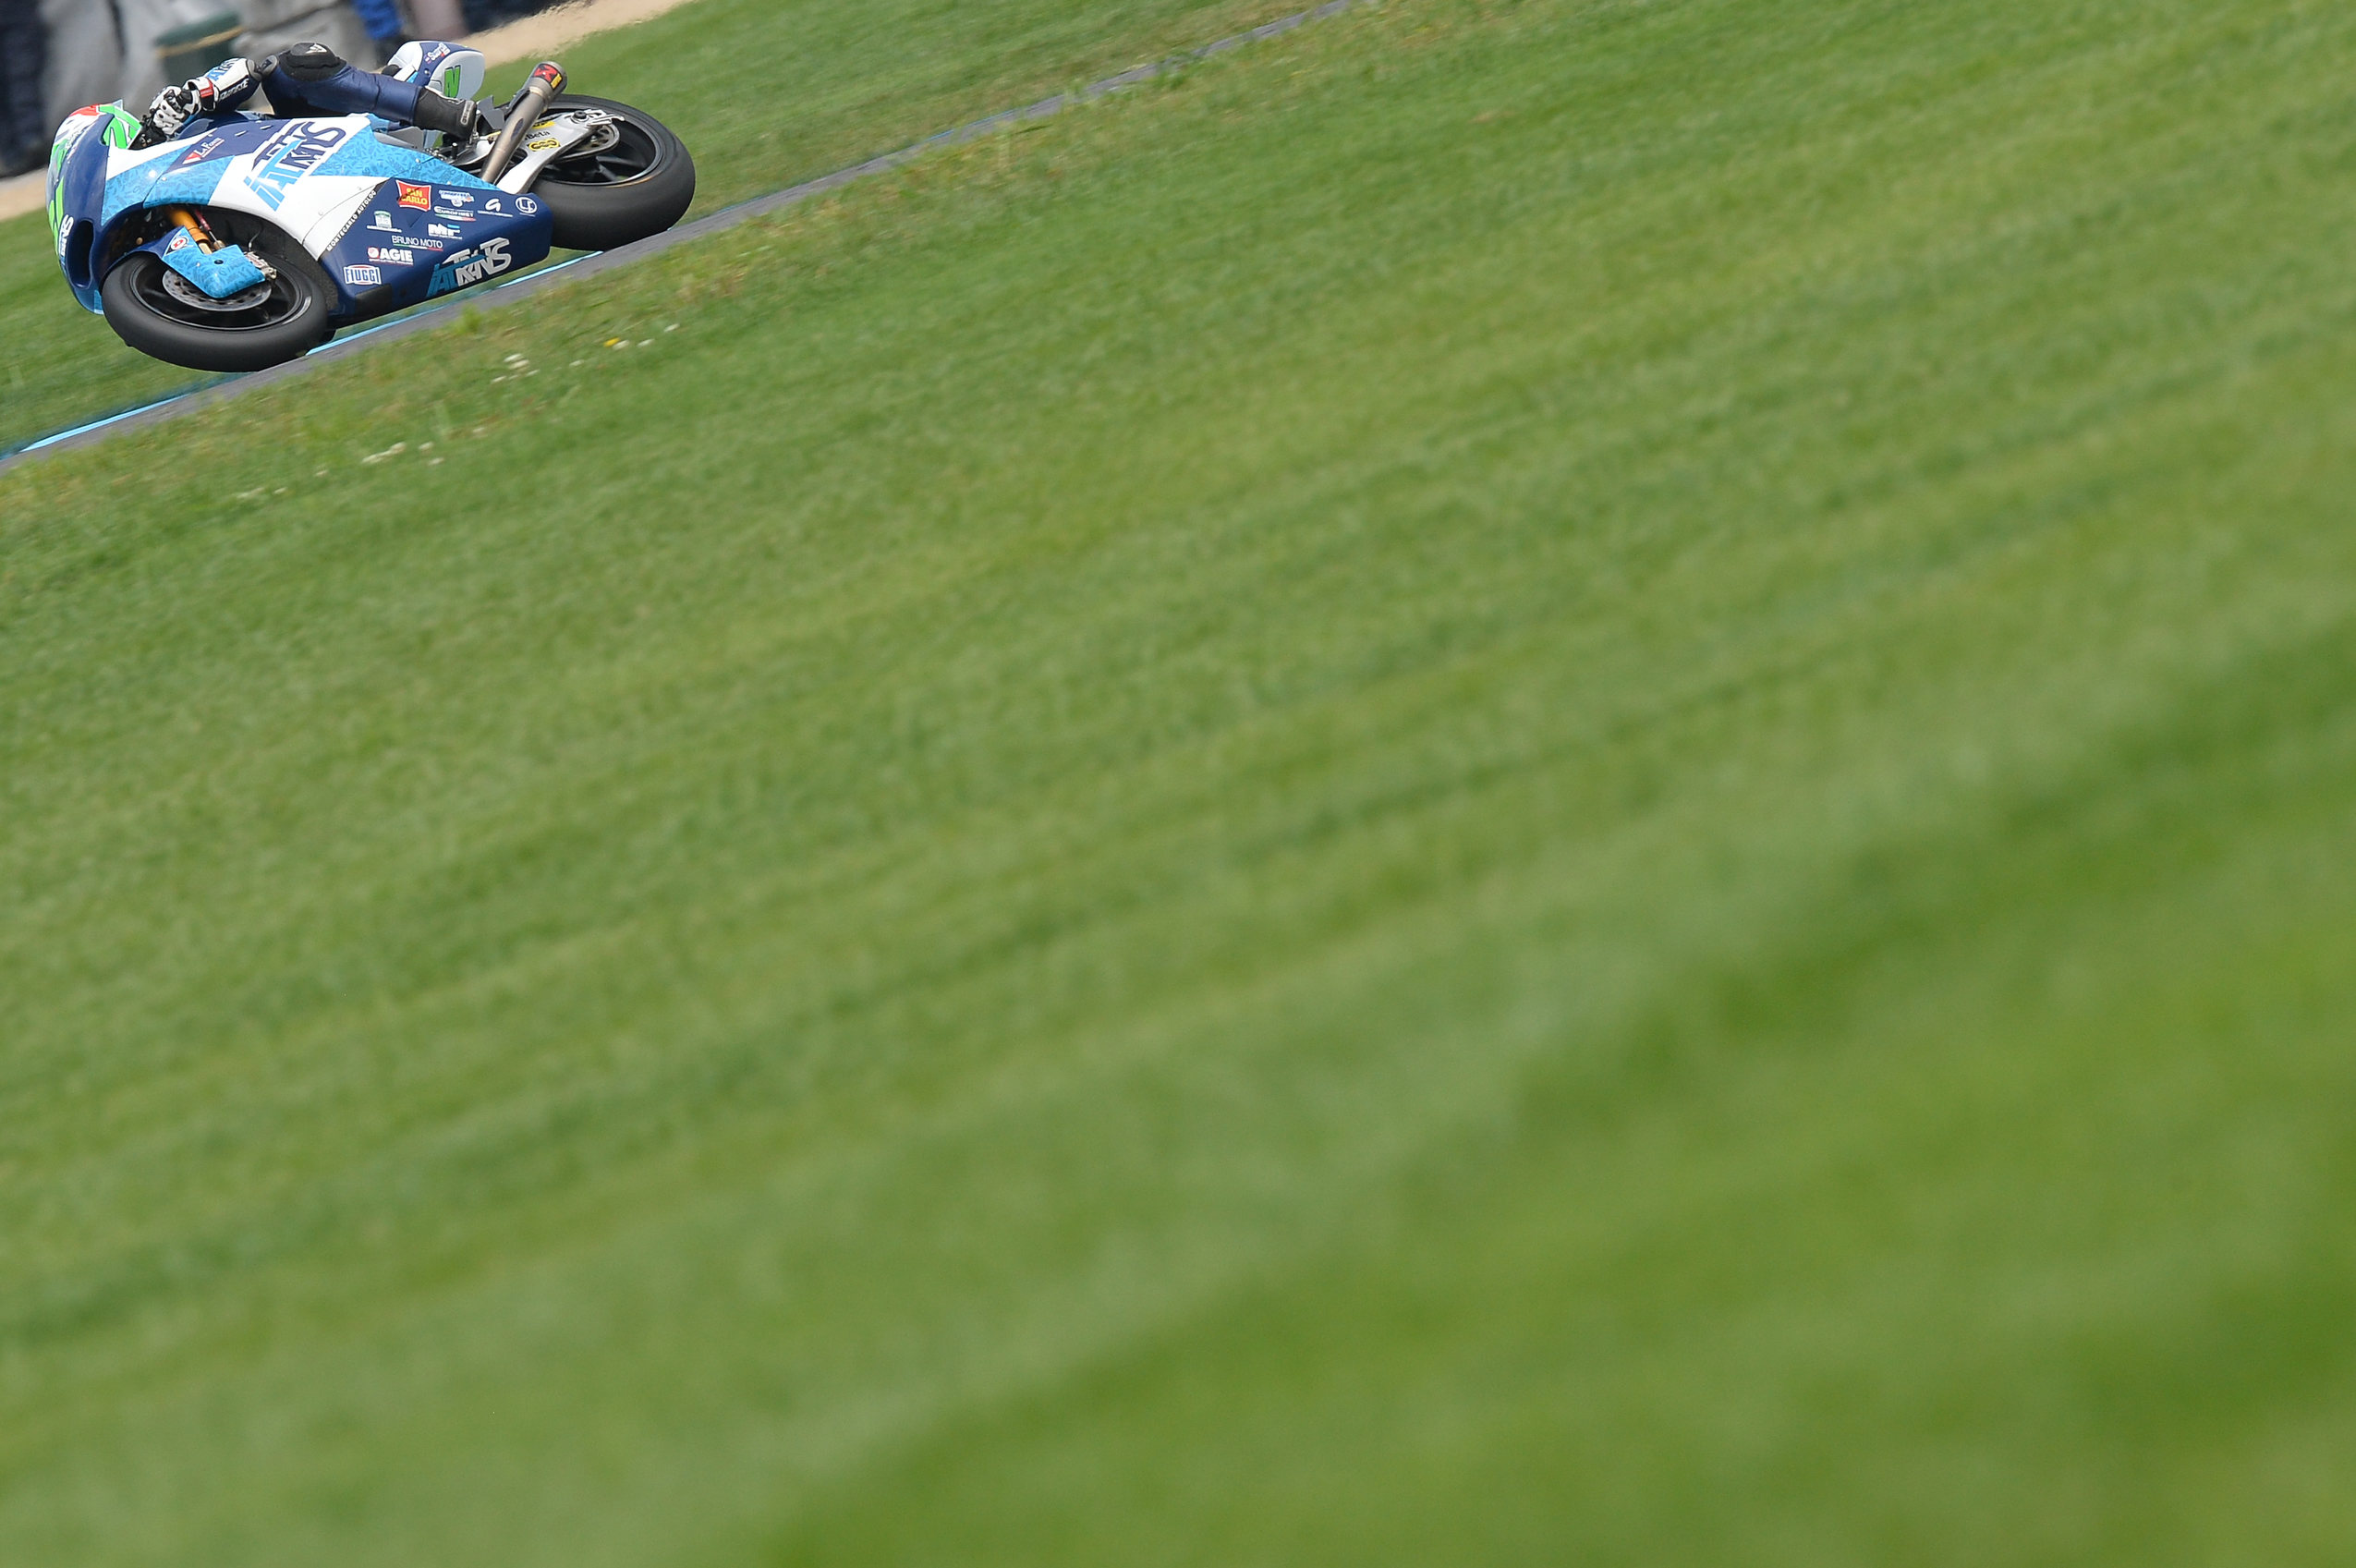 franco morbidelli - team italtrans moto2 - wmc racing 2014